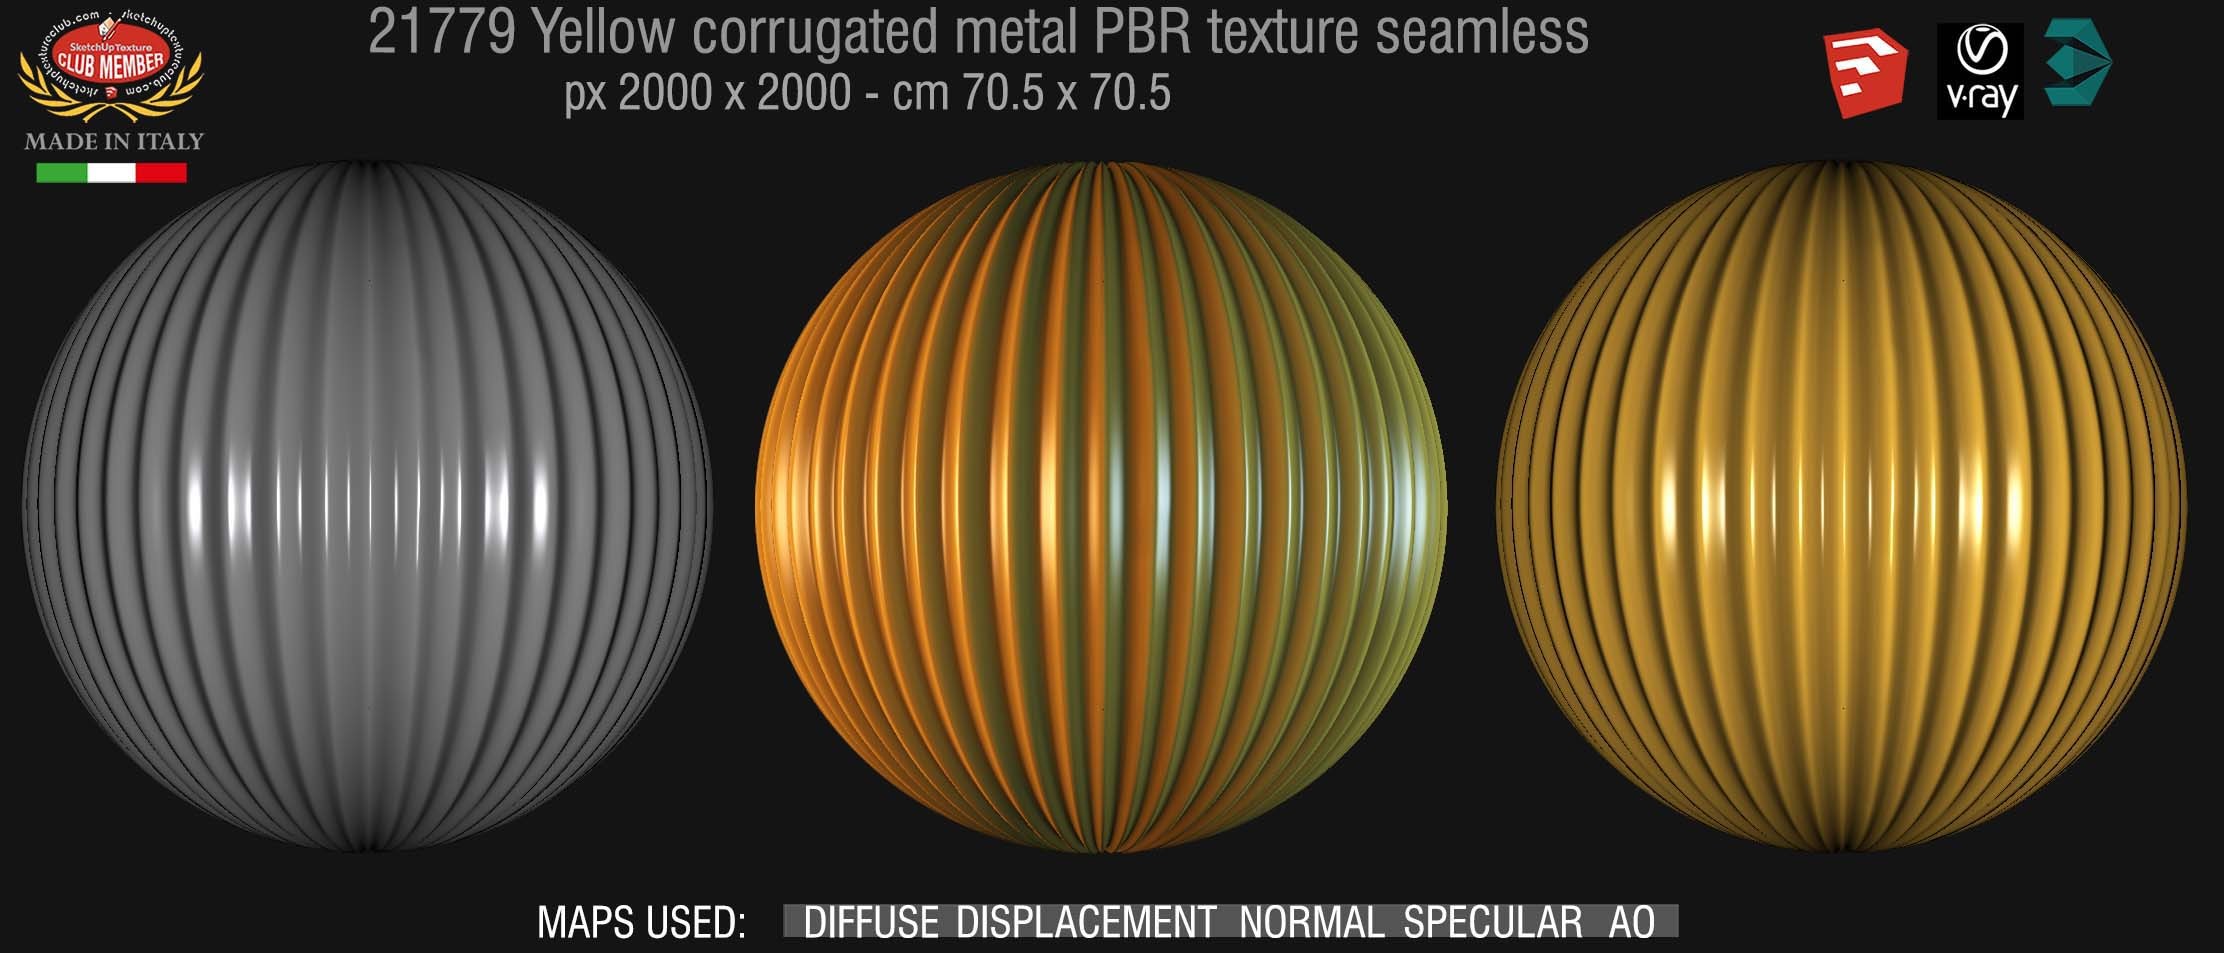 21779 Yellow corrugated metal PBR texture seamless DEMO